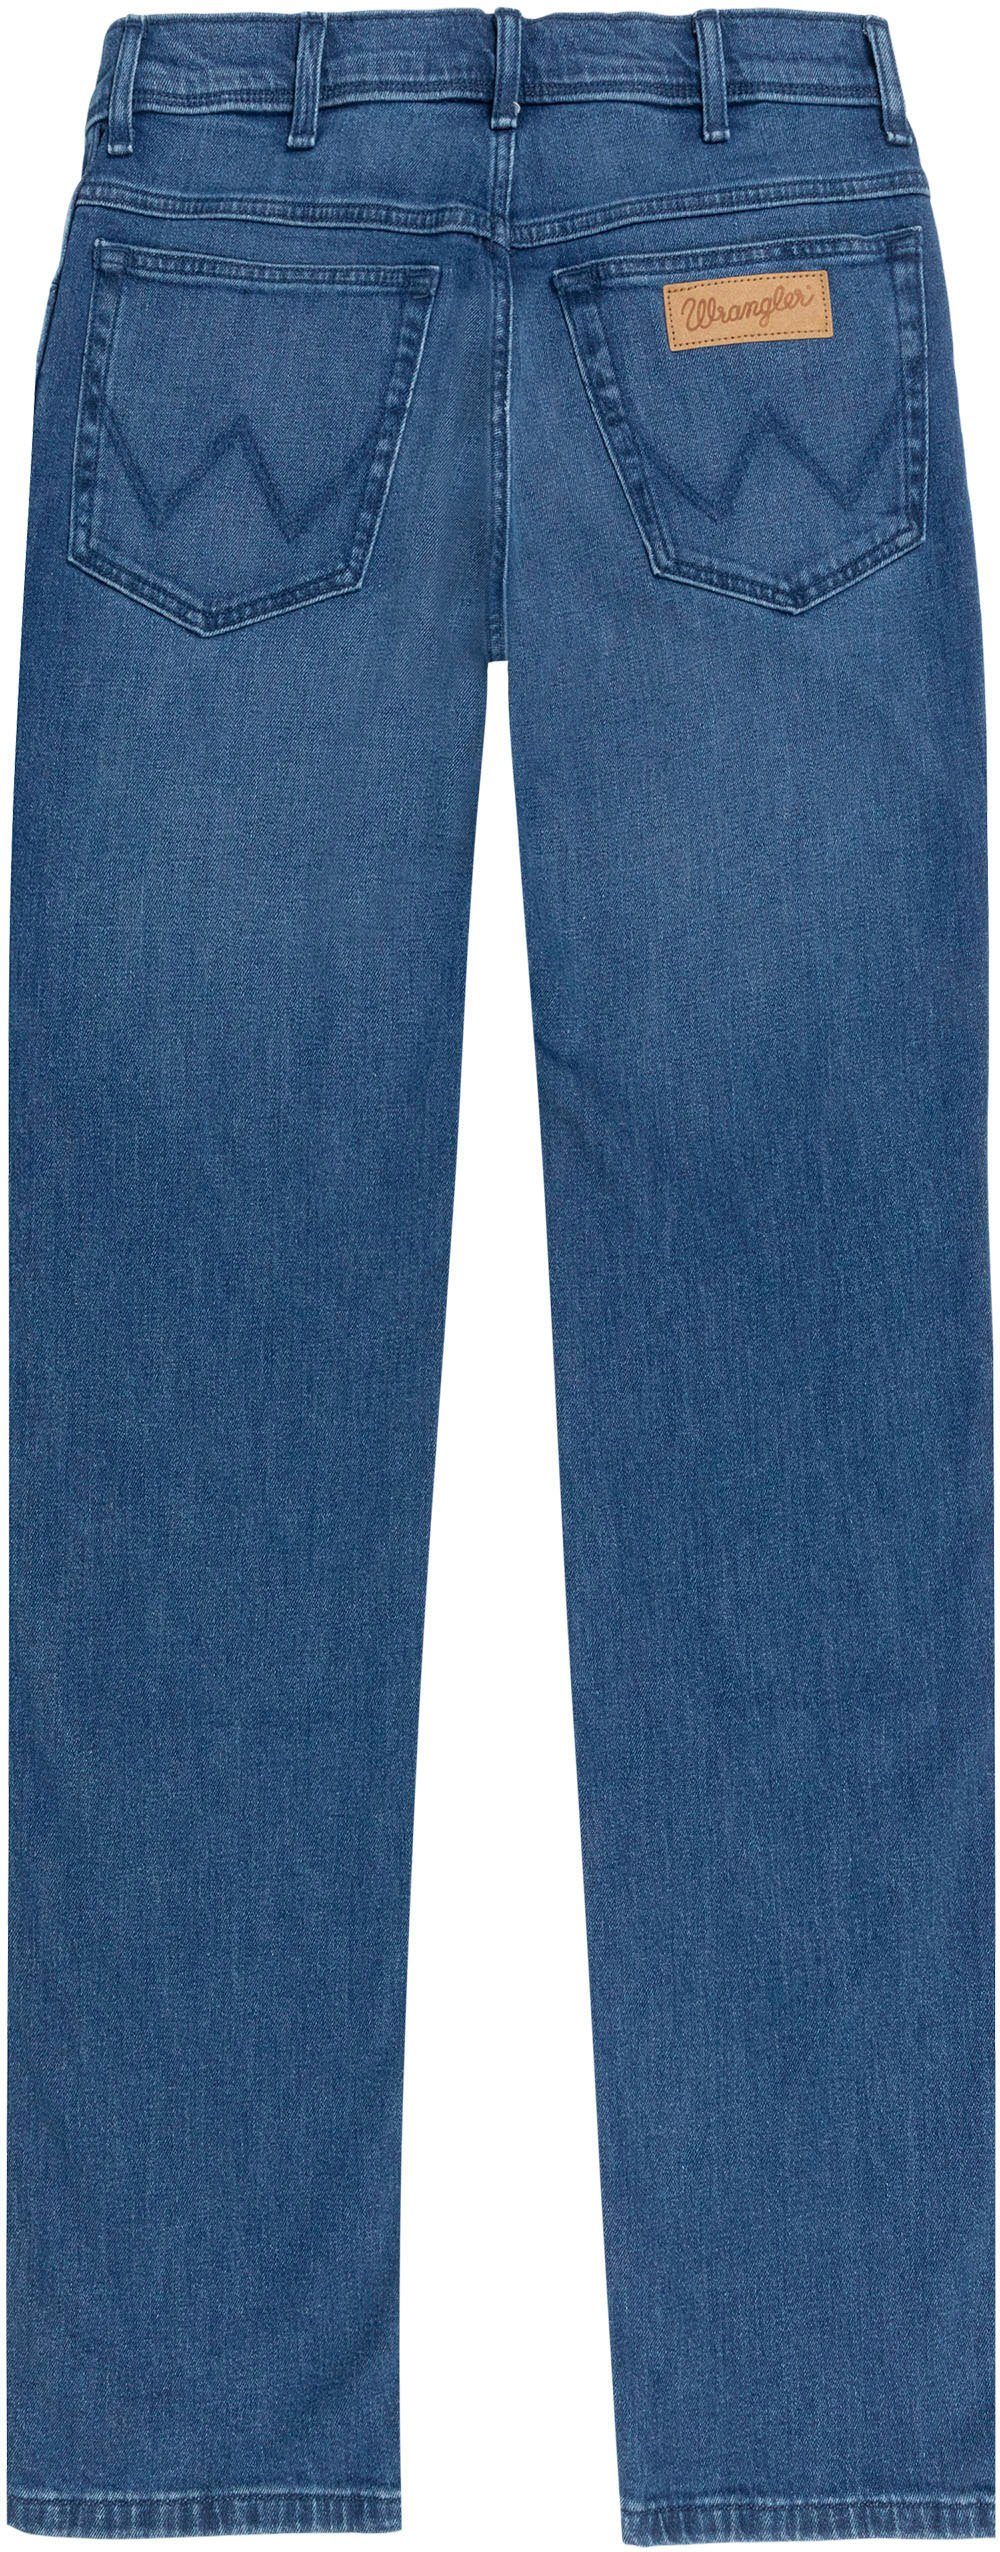 blue Stretch-Jeans aries Wrangler Texas